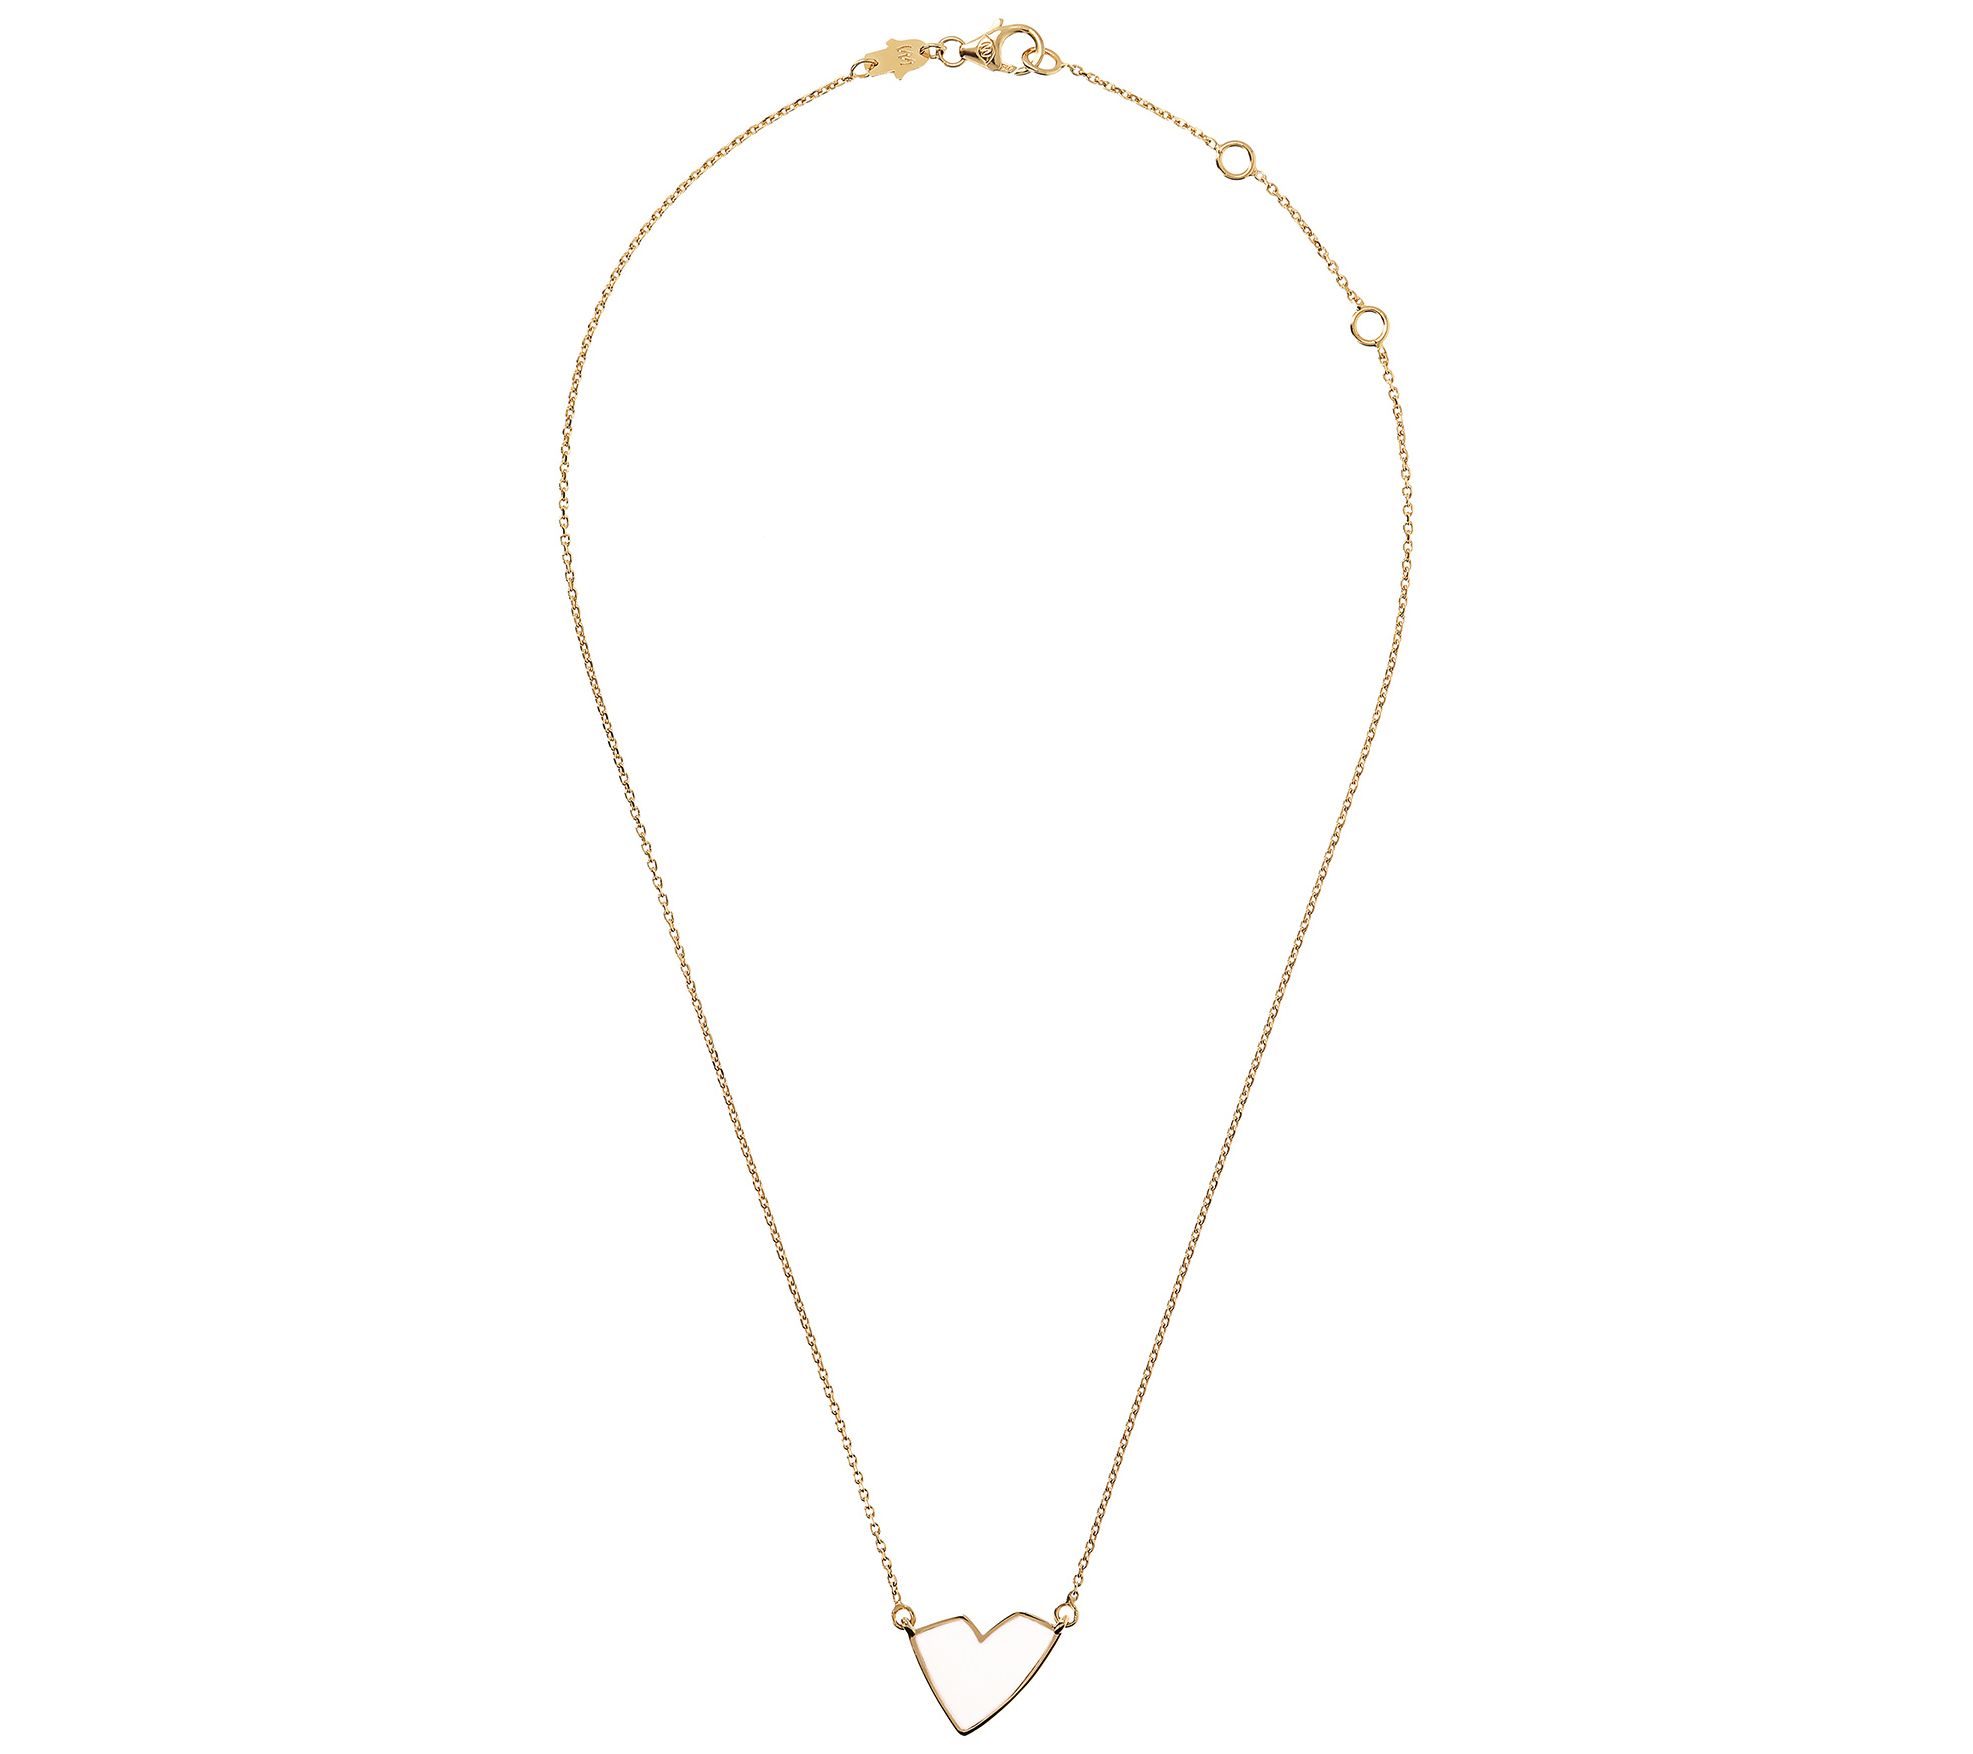 Netali Nissim Enamel Heart Necklace, 18K Gold Plated - QVC.com